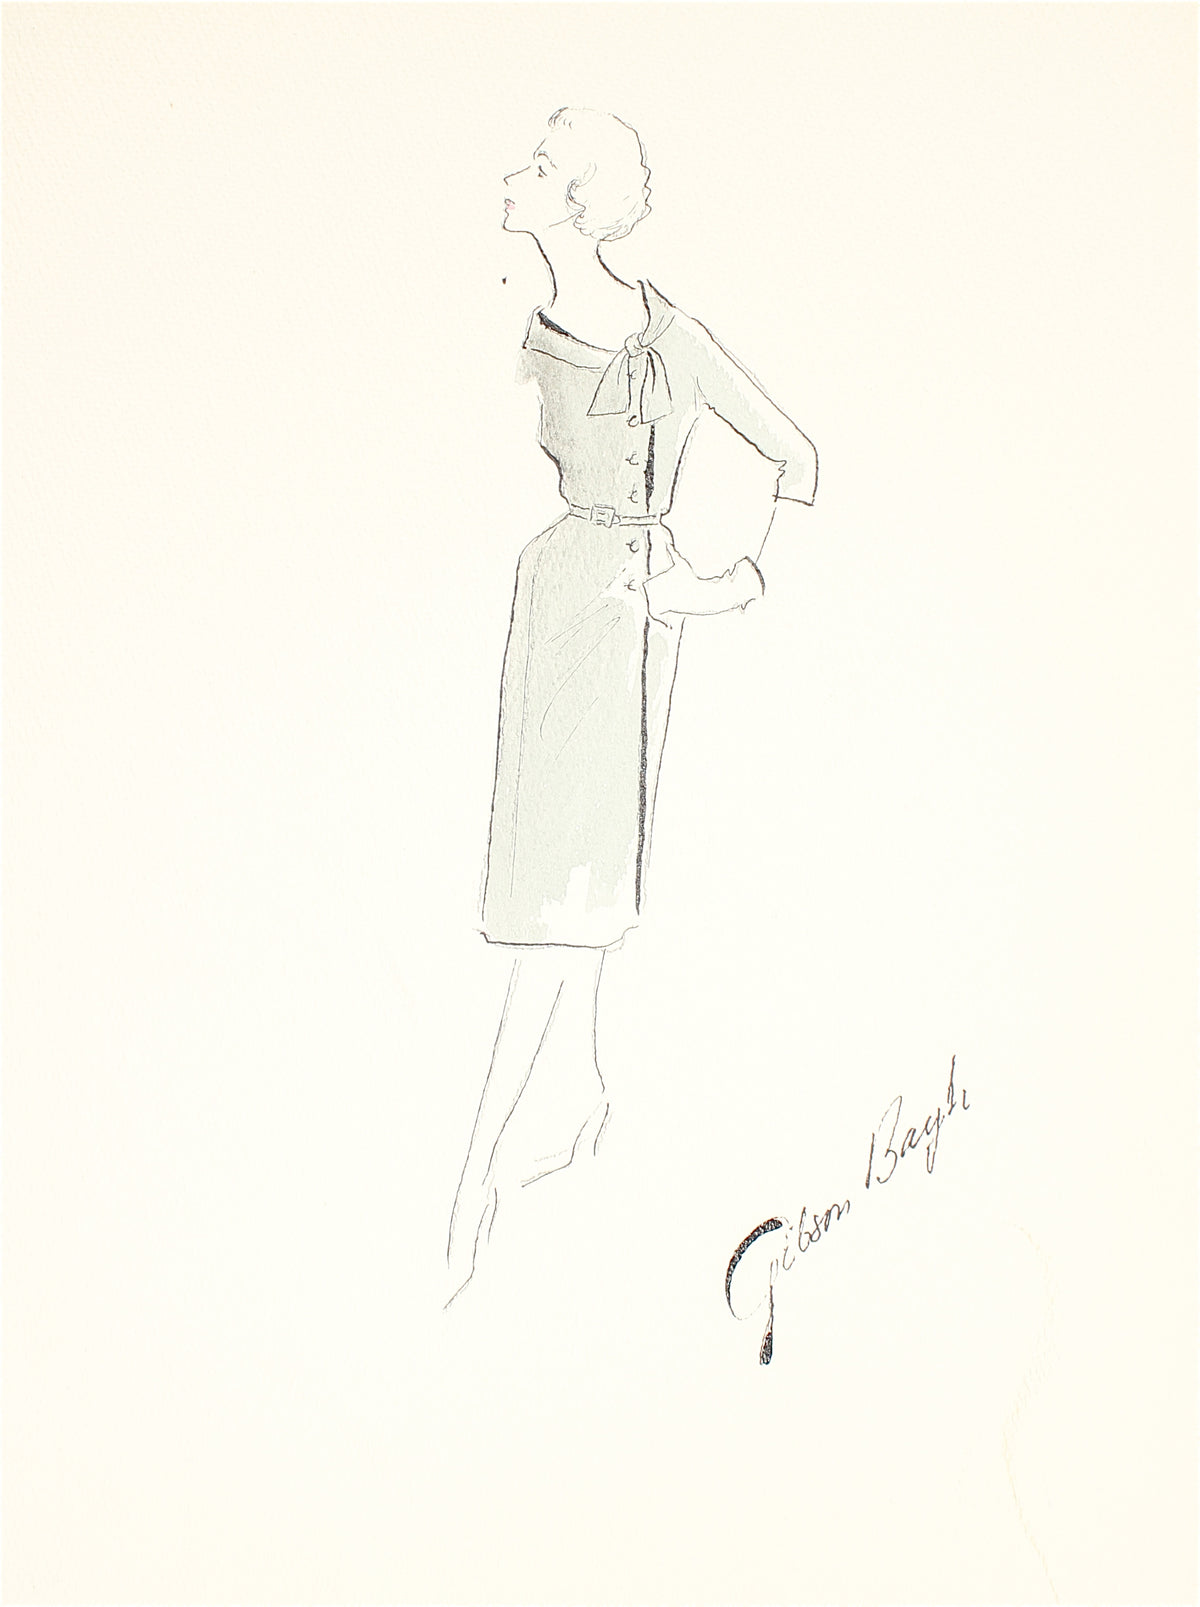 Woman in Dress with Ascot&lt;br&gt;1950s Fashion Illustration&lt;br&gt;&lt;br&gt;#26544